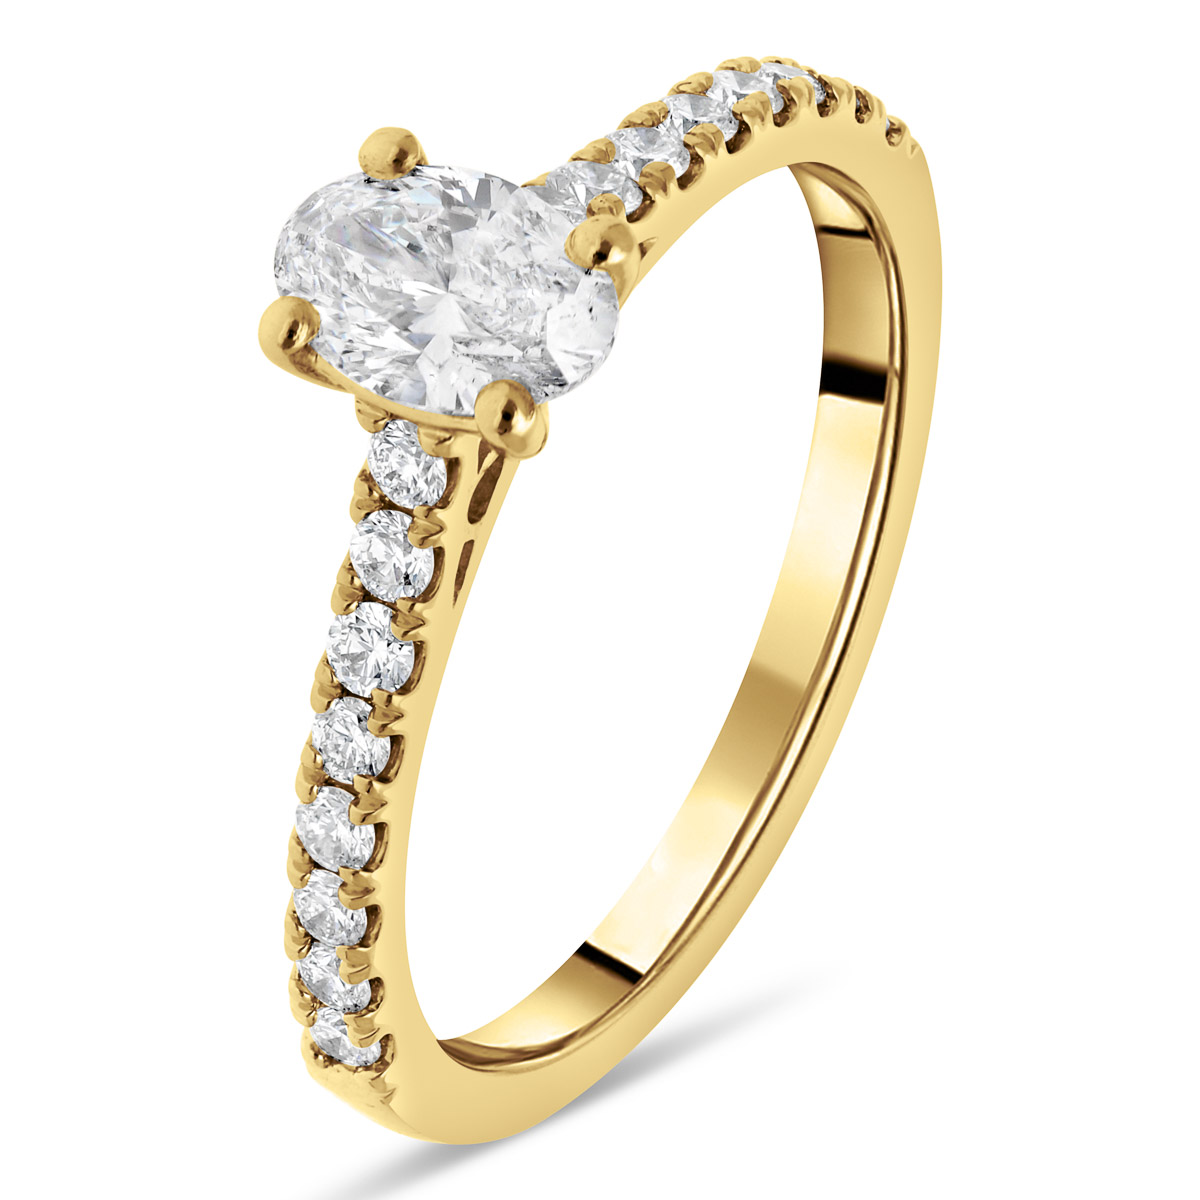 rangiroa-solitaires-diamants-certifies-accompagne-or-jaune-750-